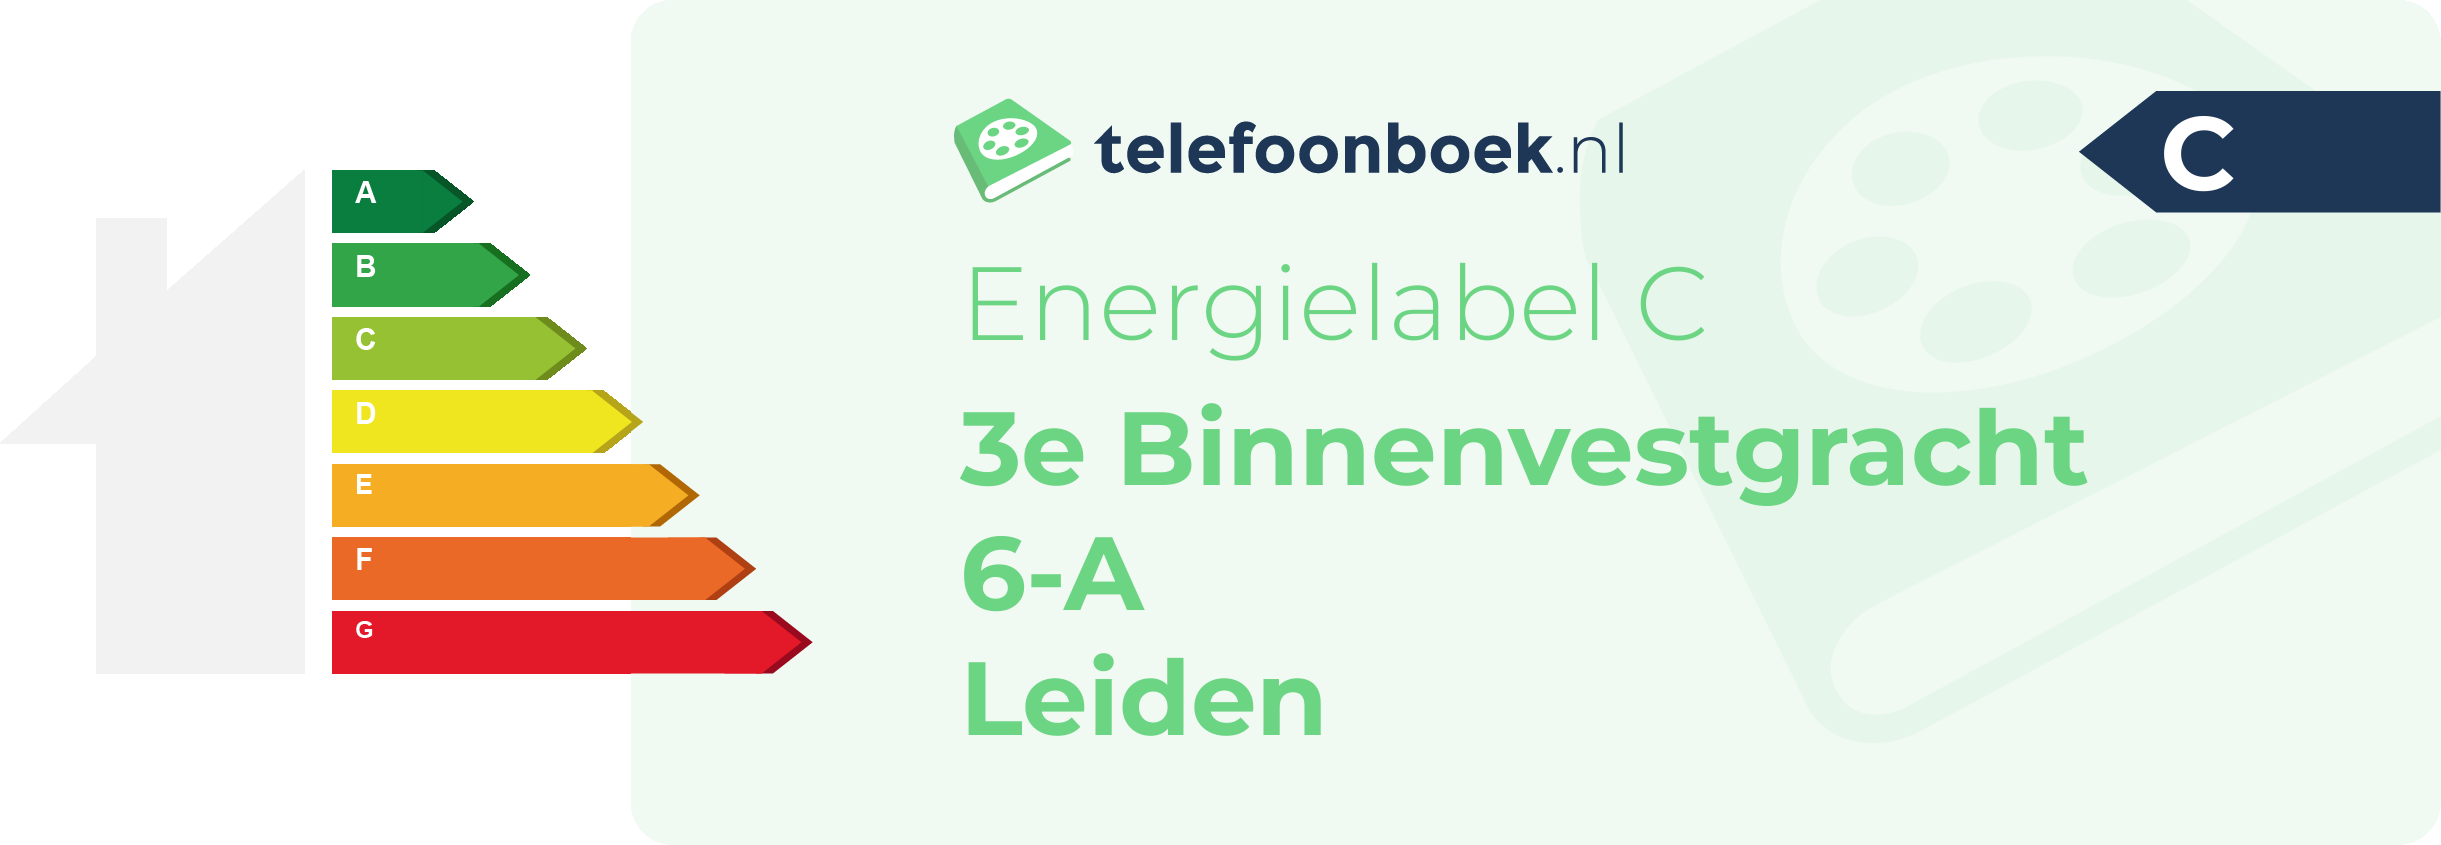 Energielabel 3e Binnenvestgracht 6-A Leiden